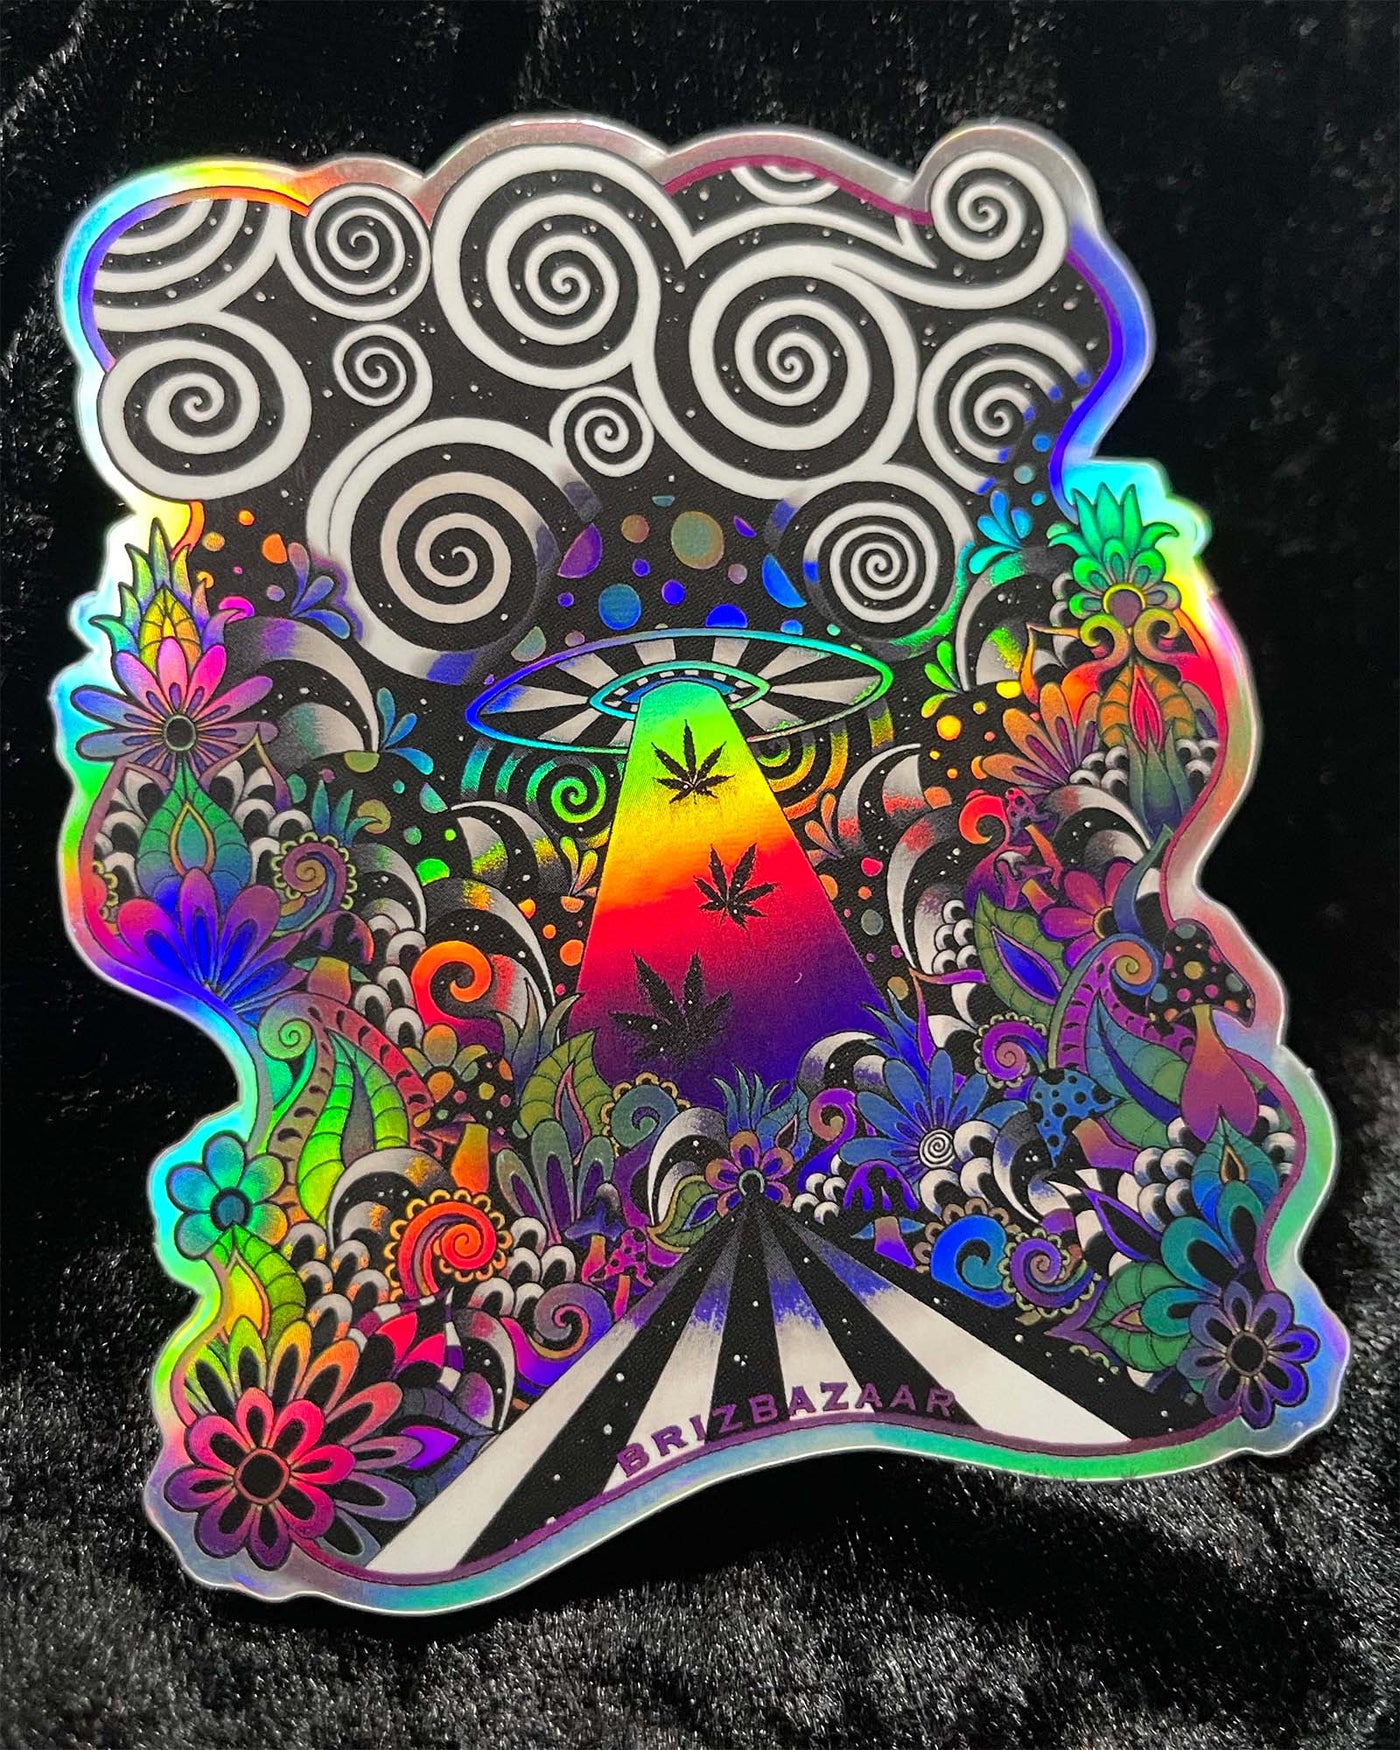 Holographic sticker of Brizland